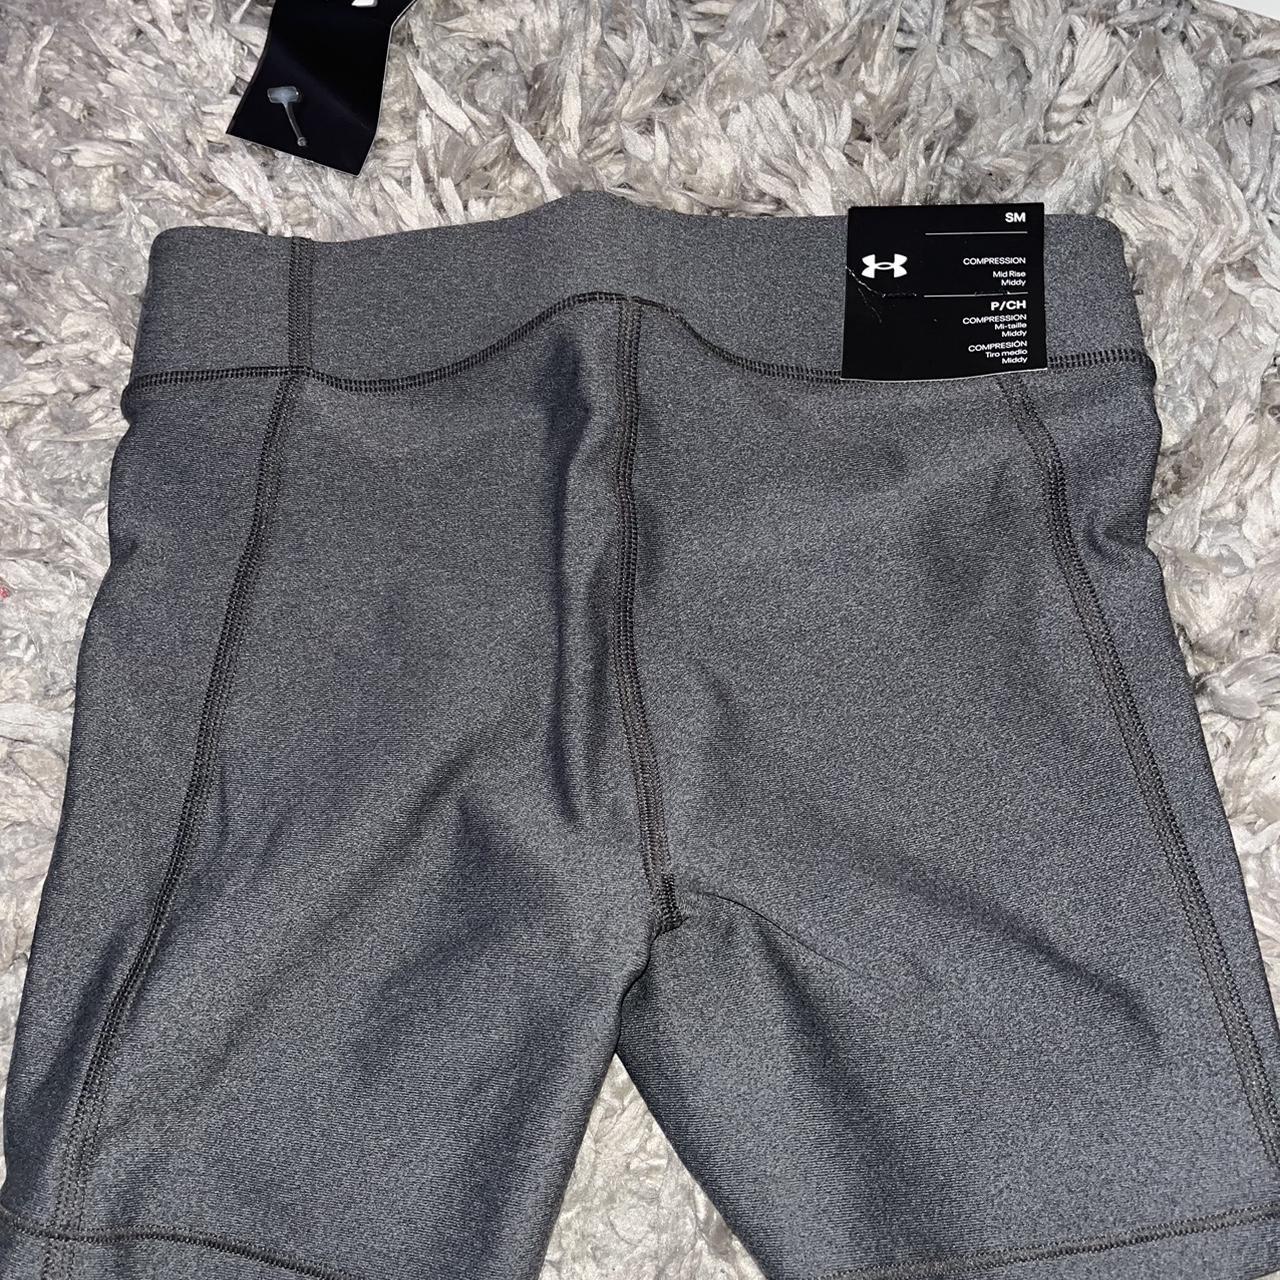 under armor black shorts size xs left shorts/grey - Depop